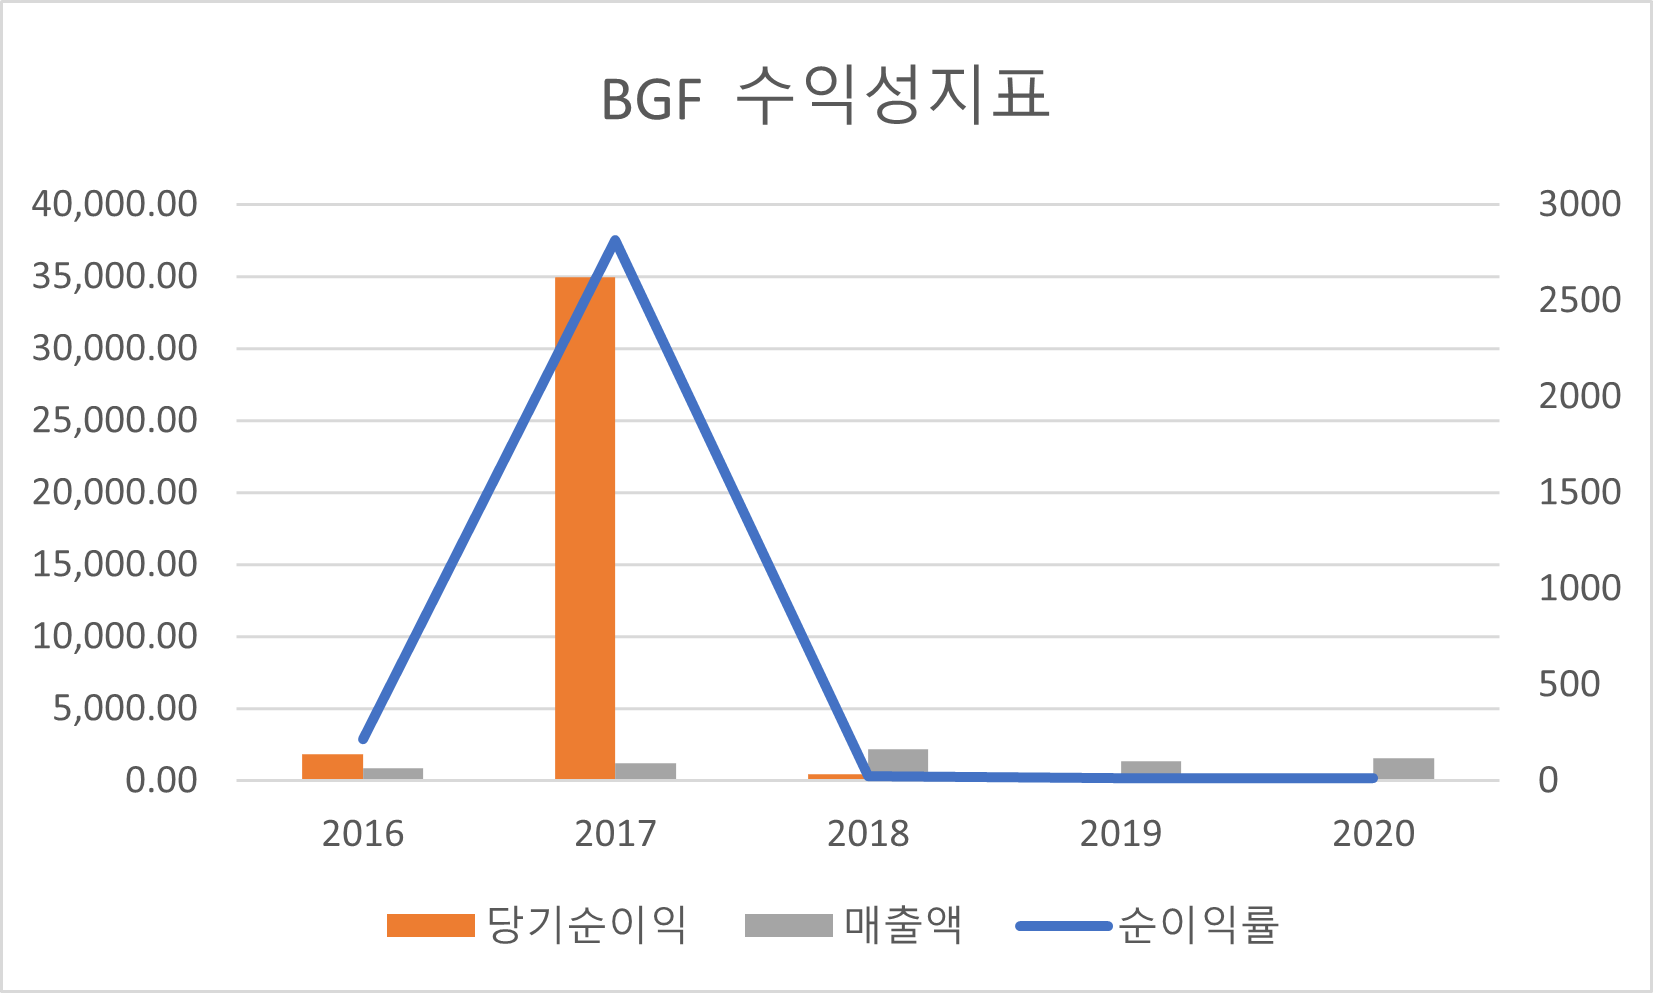 BGF 수익성 지표